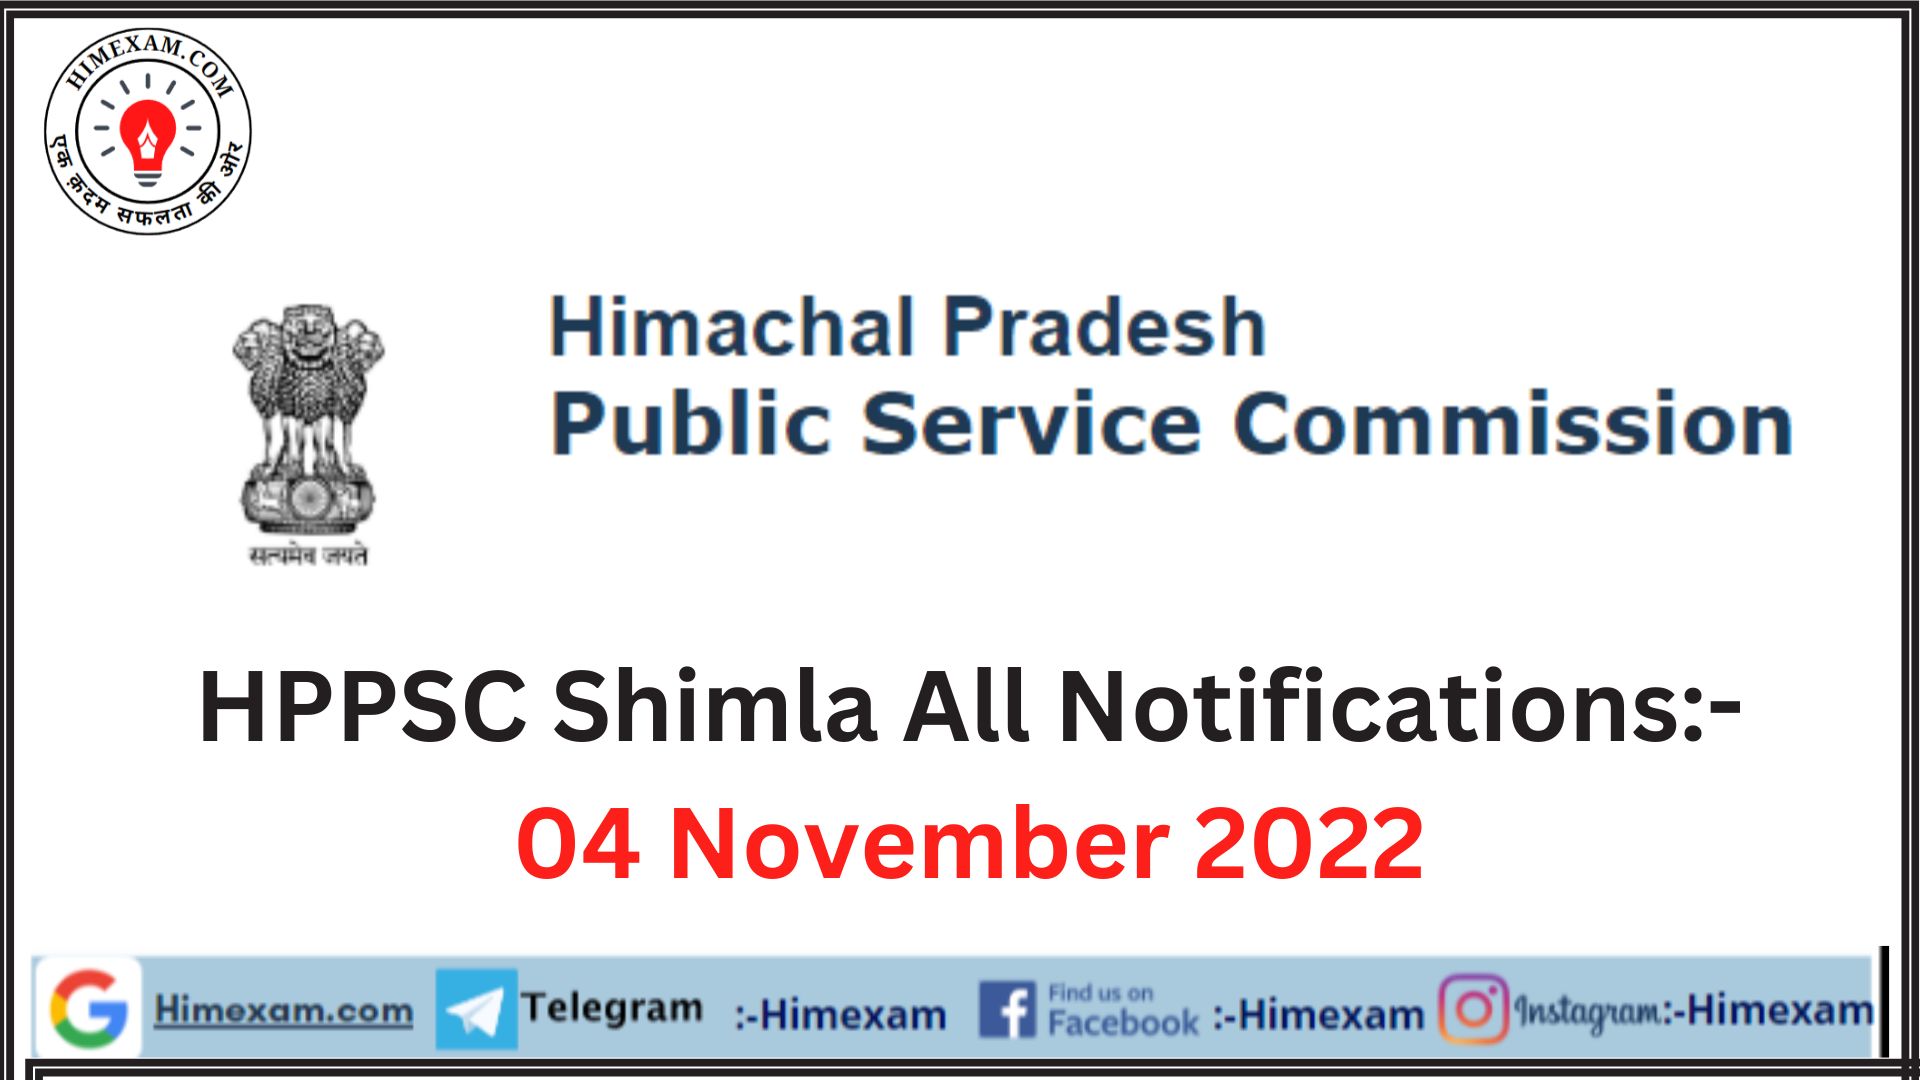 HPPSC Shimla All Notifications:- 04 November 2022